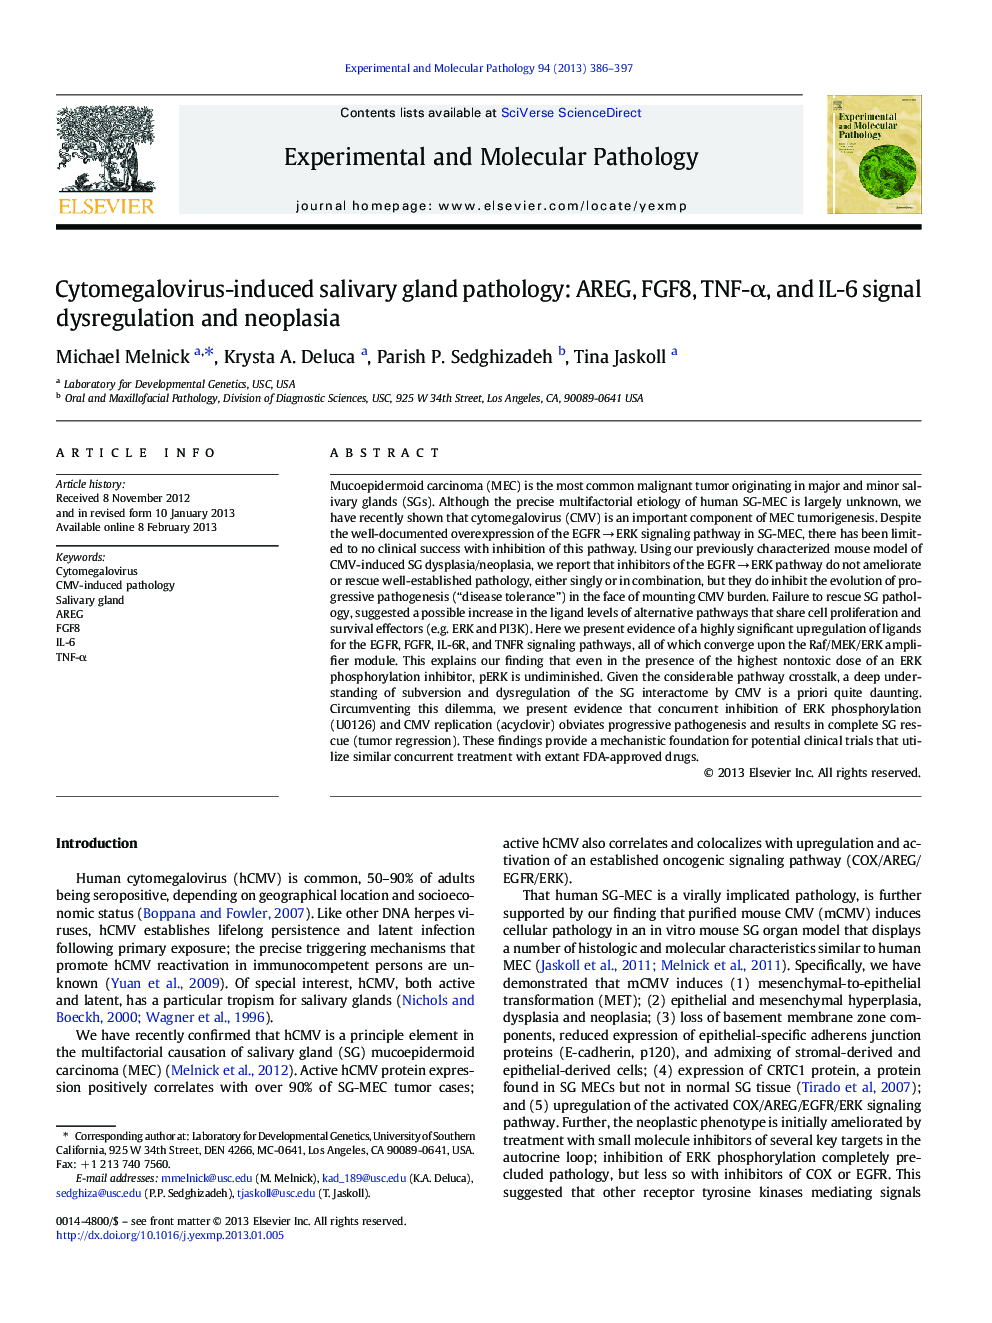 Cytomegalovirus-induced salivary gland pathology: AREG, FGF8, TNF-α, and IL-6 signal dysregulation and neoplasia